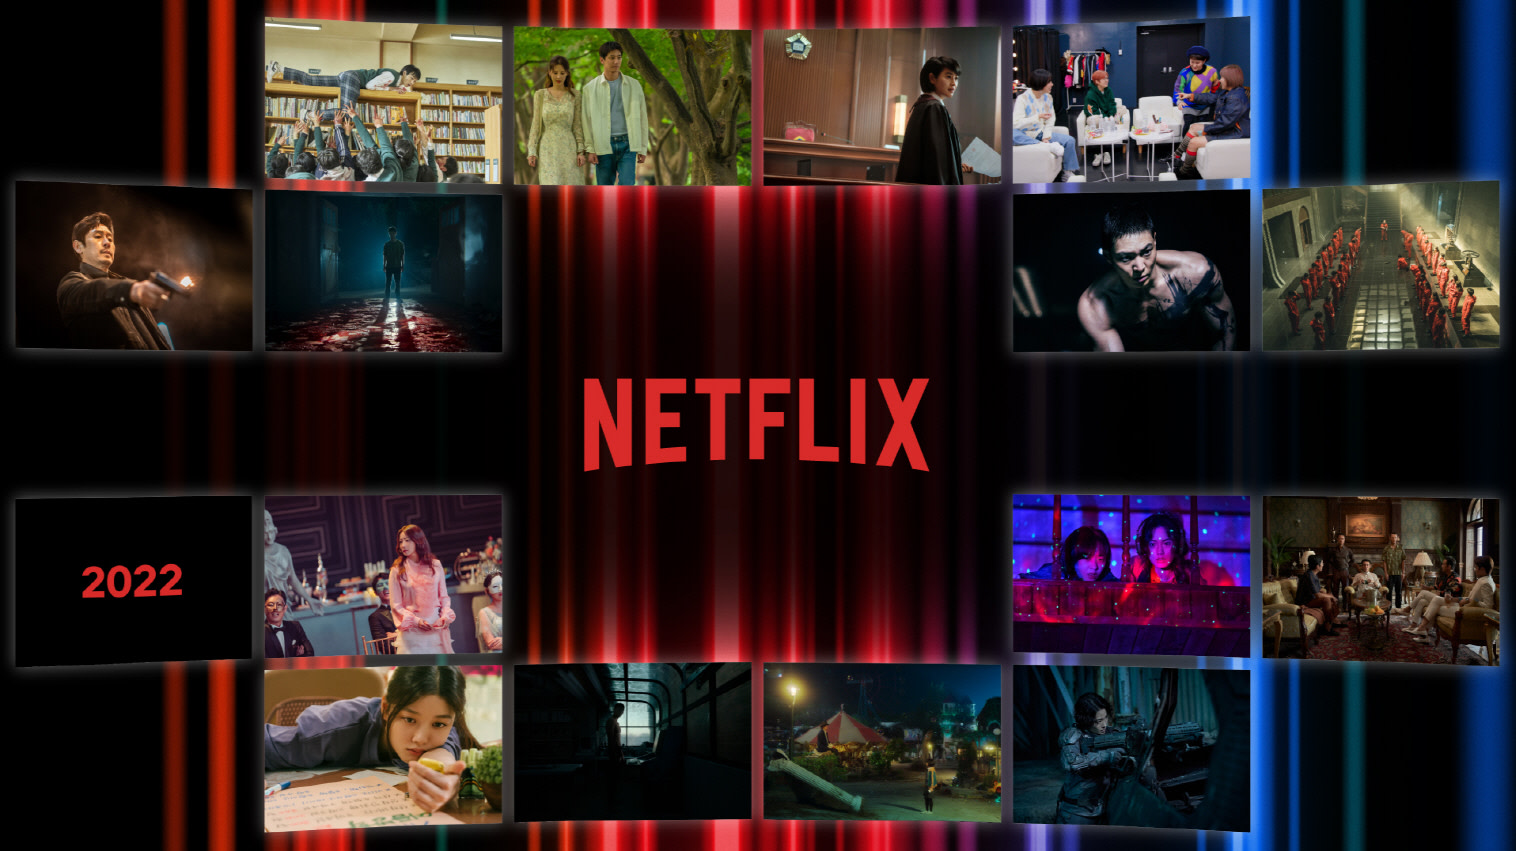 Netflix unveils its 2022 film lineup